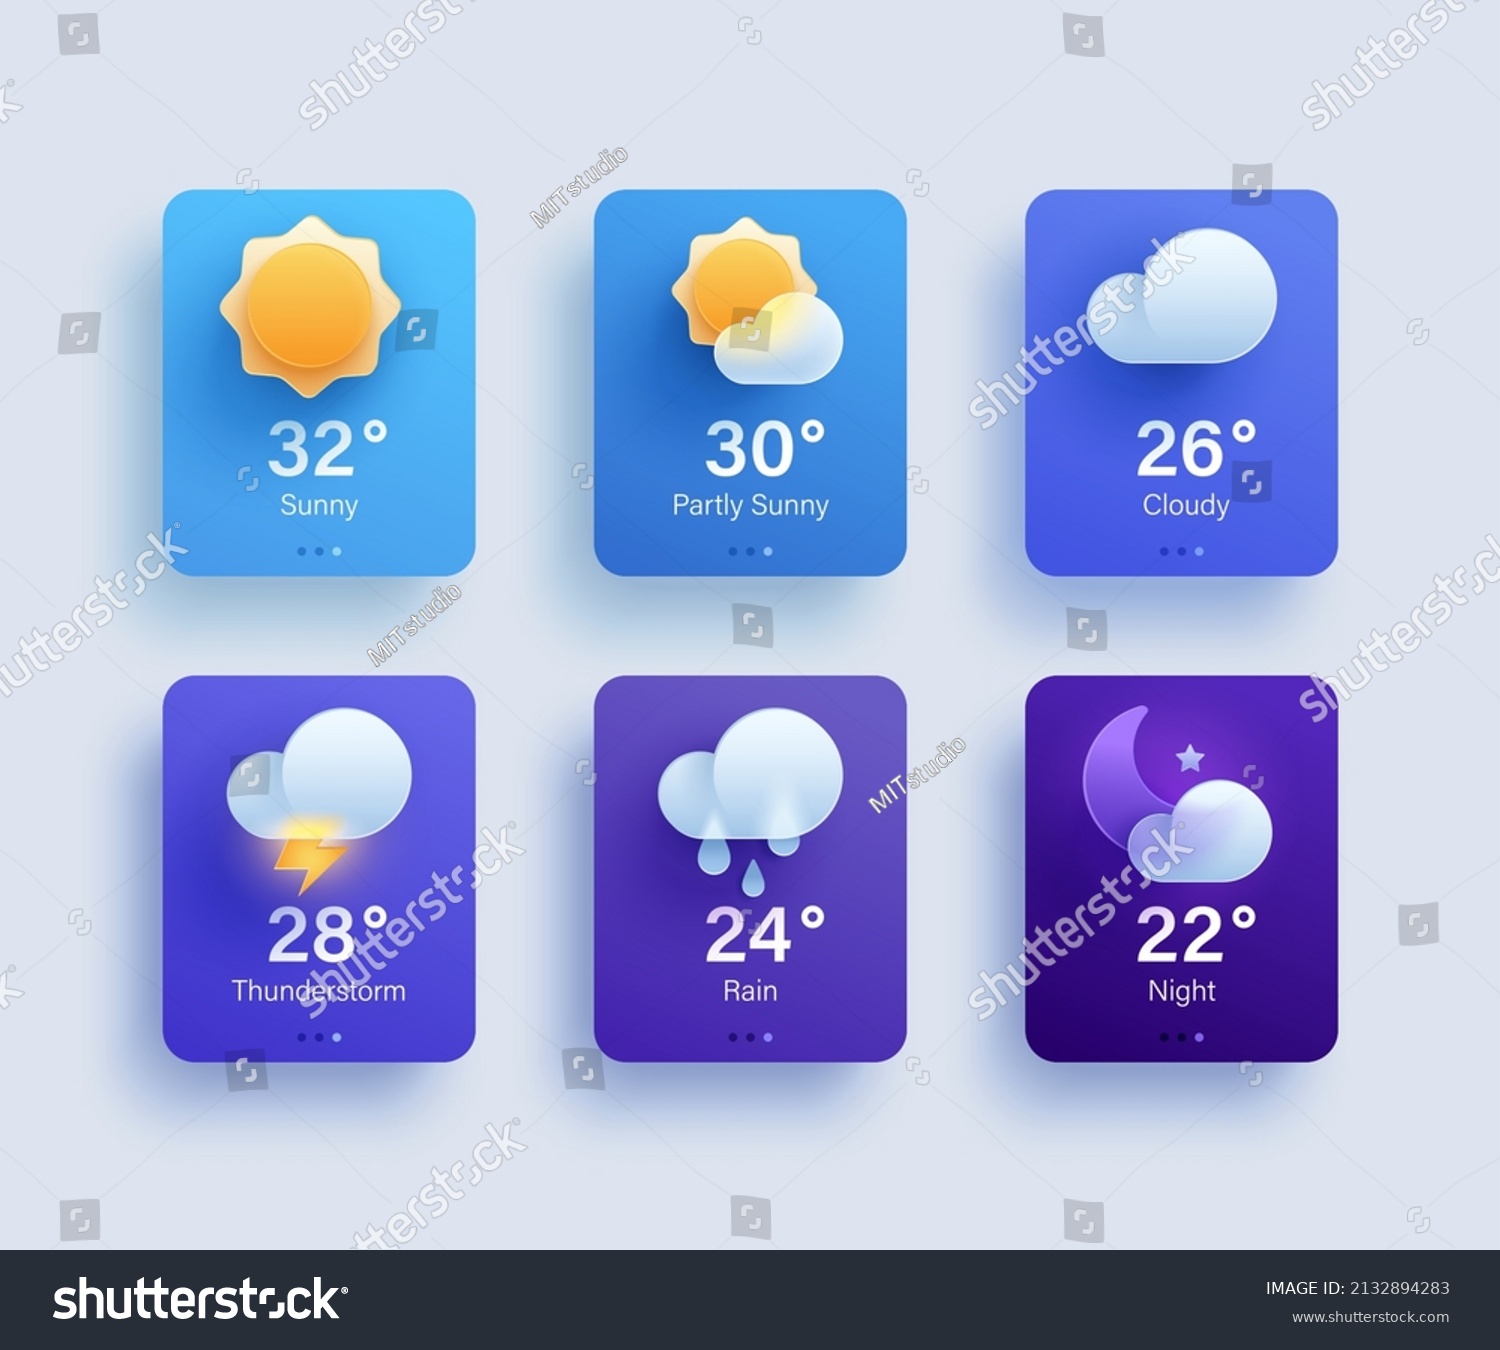 Website or mobile app ui icon set for weather forecast. 3d modern glass morphism design. #2132894283